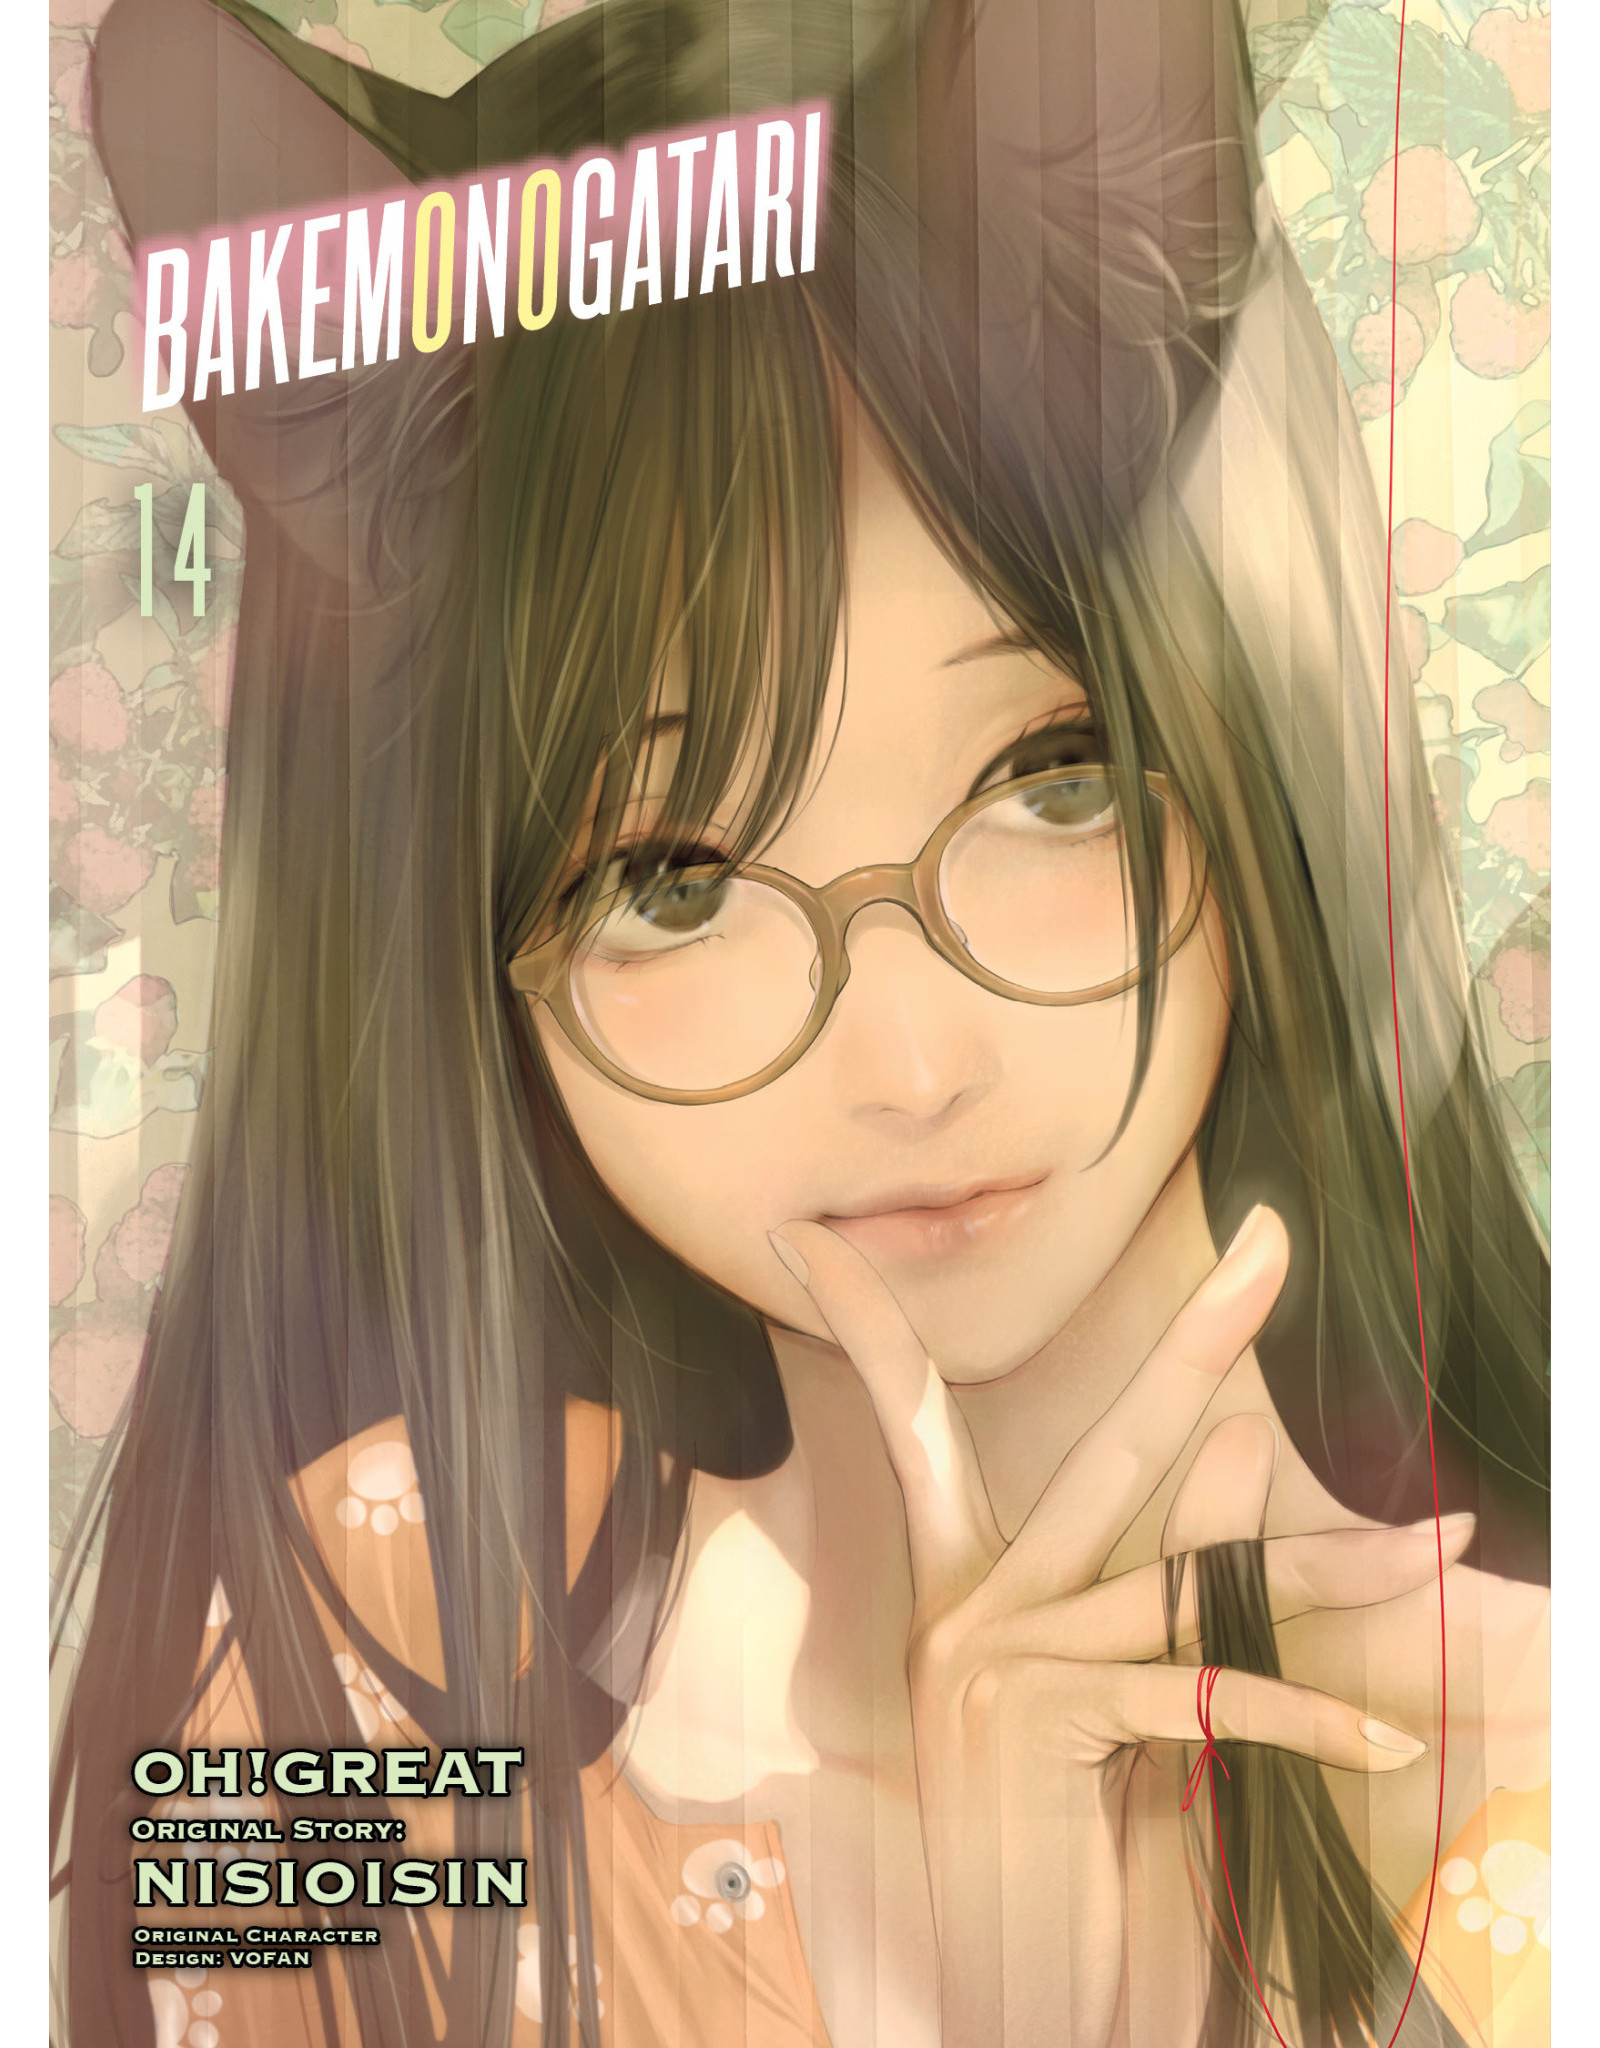 Bakemonogatari 14 (English) - Manga